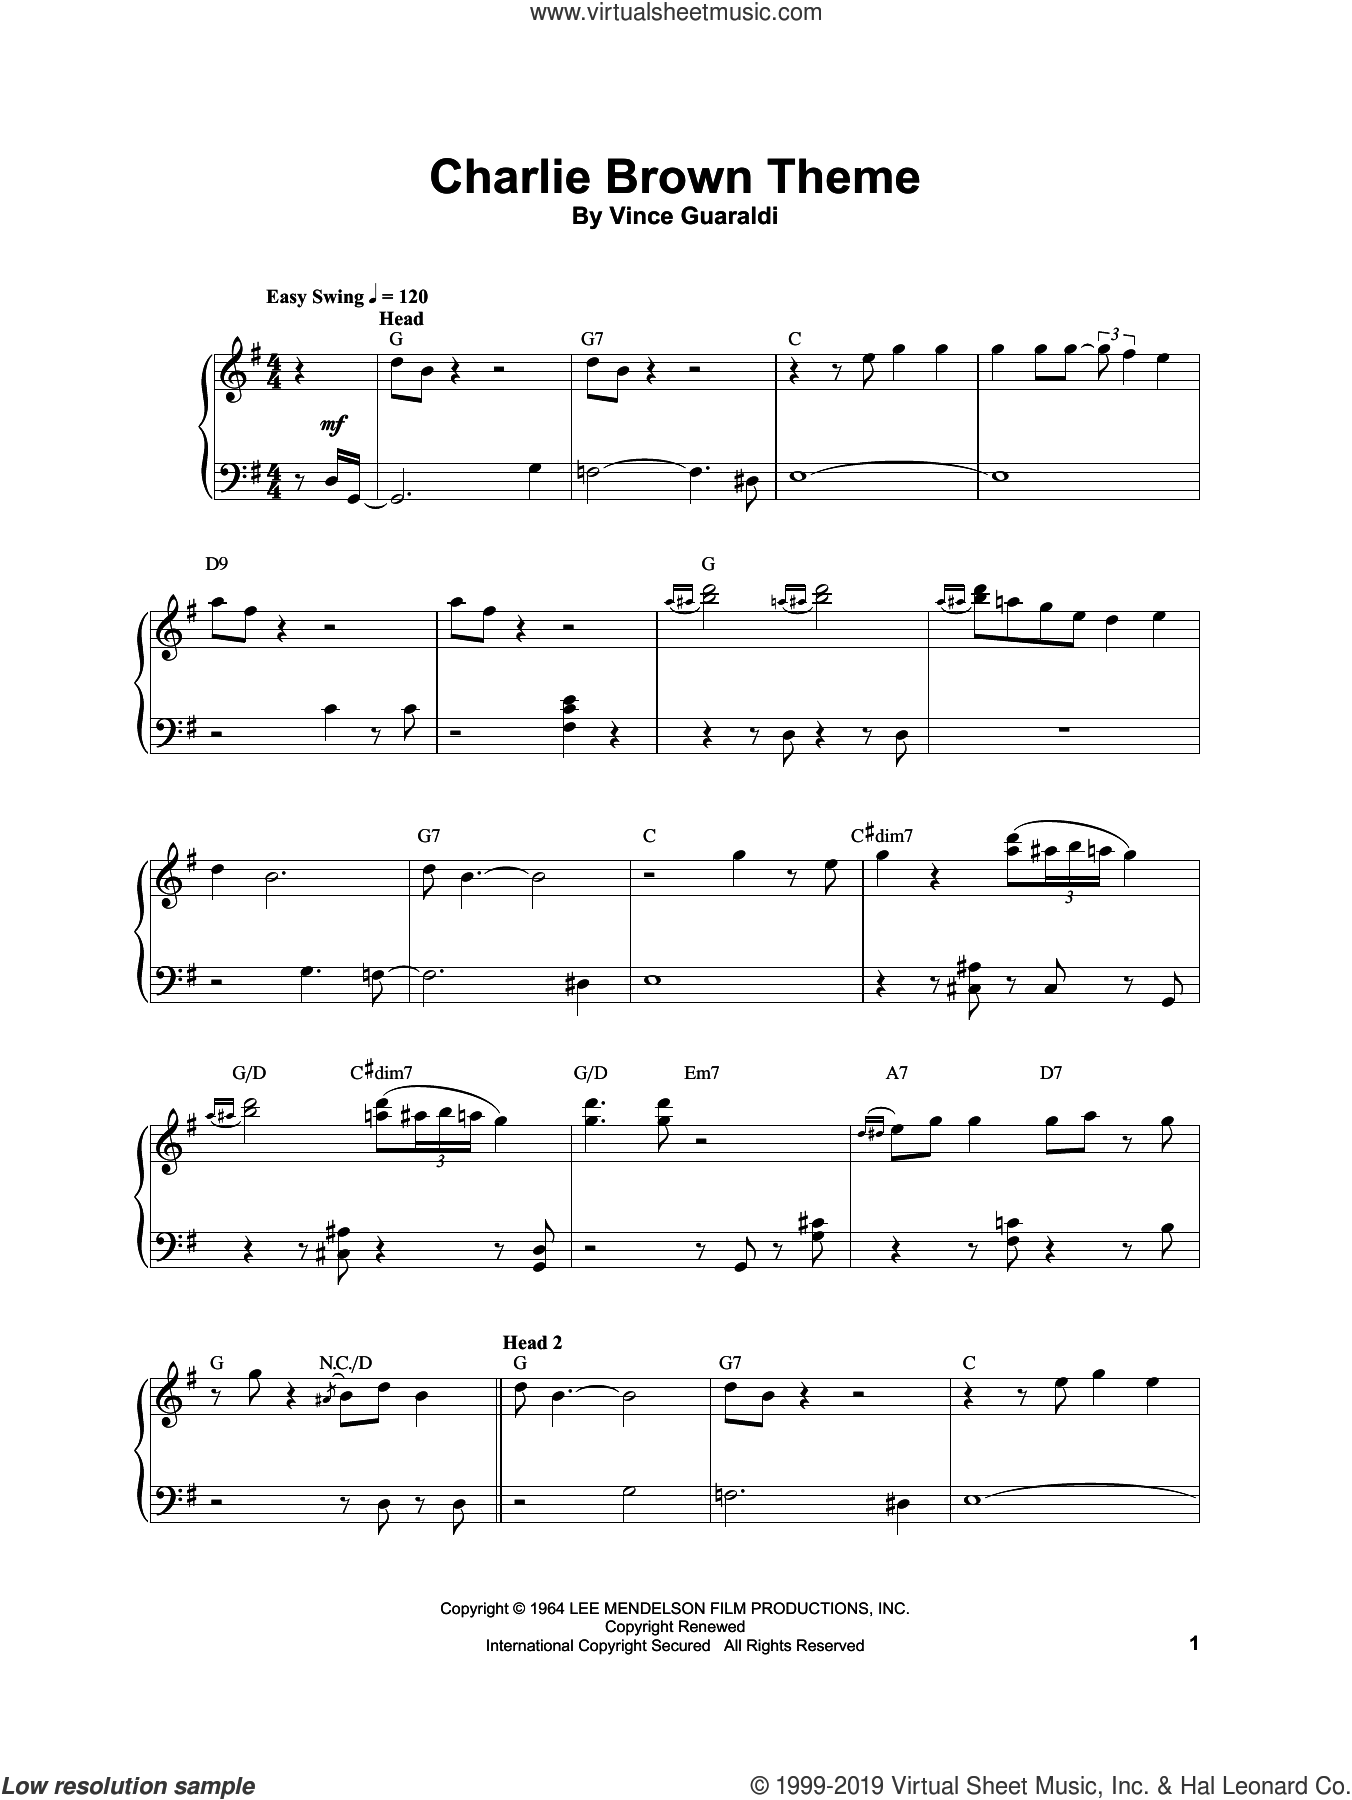 Guaraldi - Charlie Brown Theme sheet music (intermediate) for piano